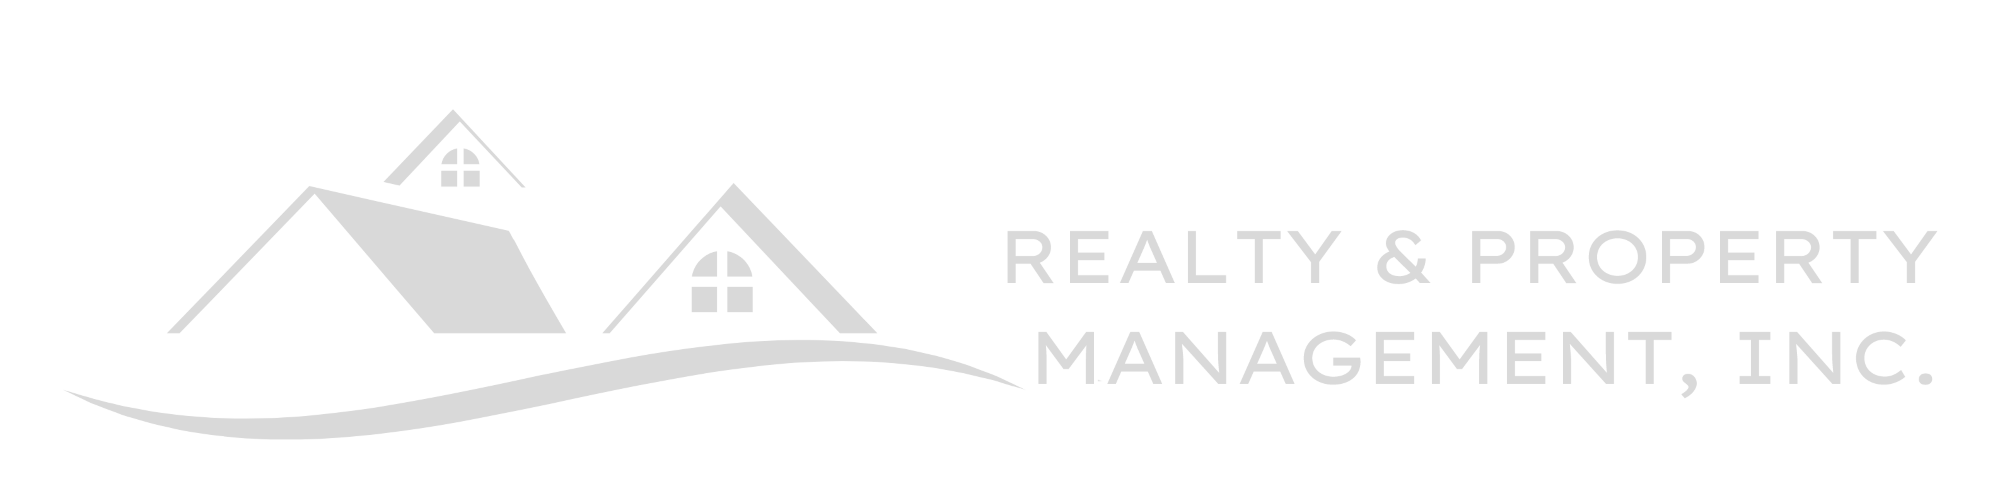 North Lake Realty & Property Management Logo